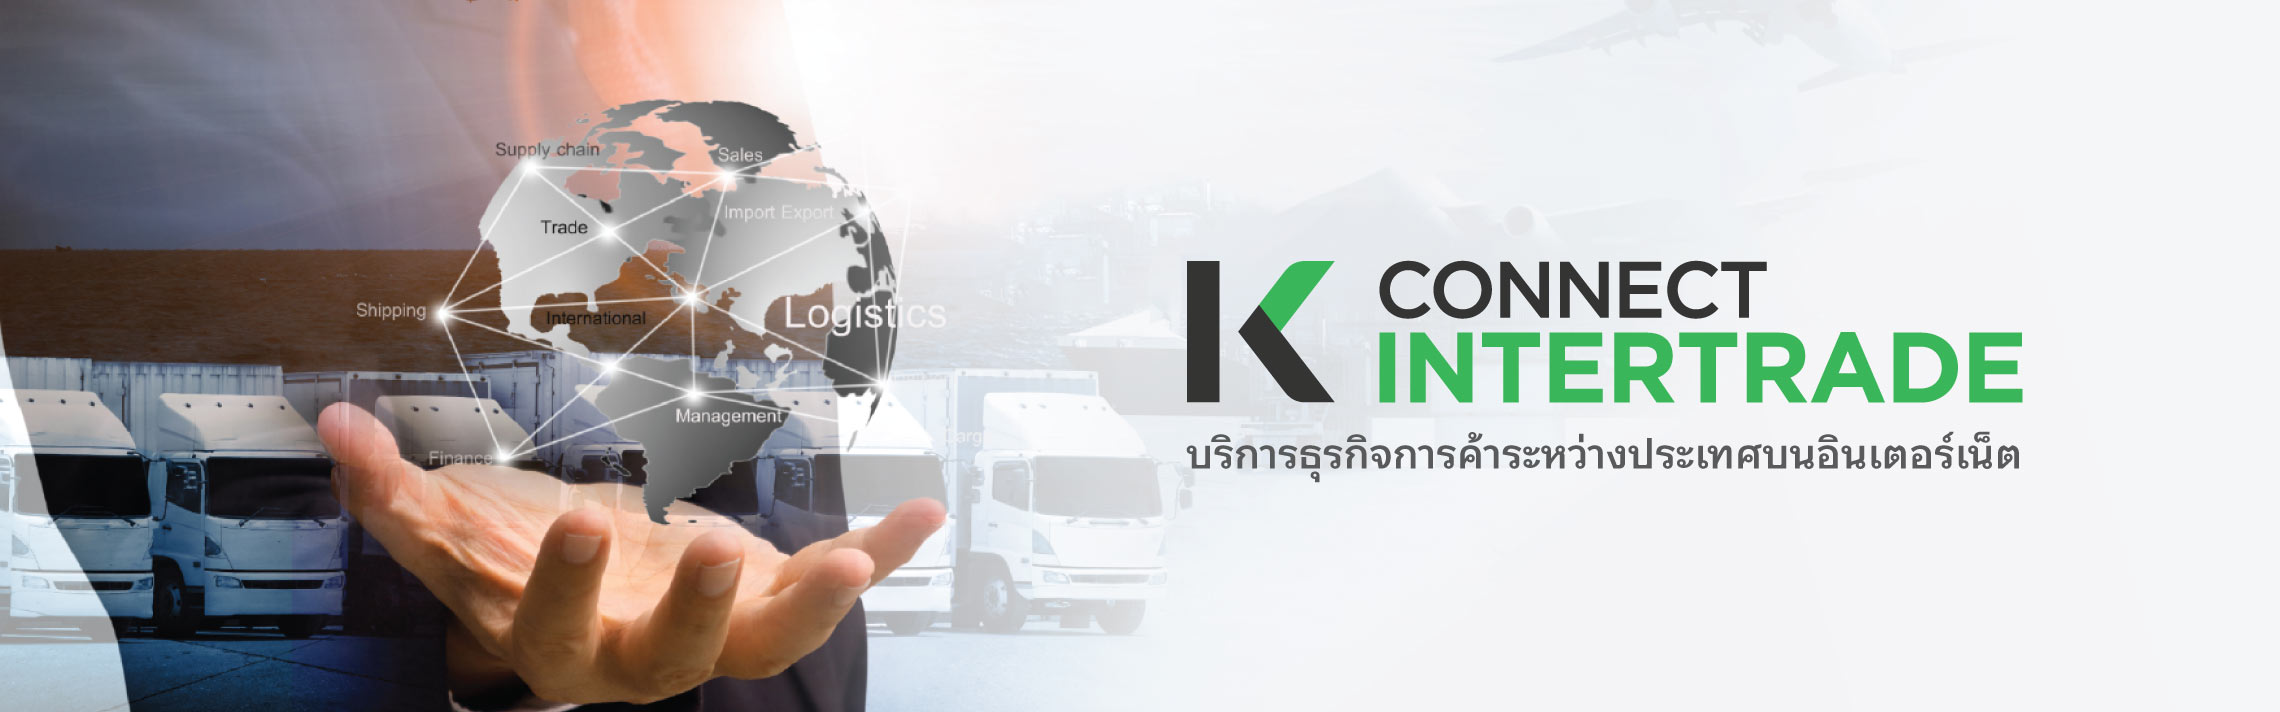 K Connect Intertrade